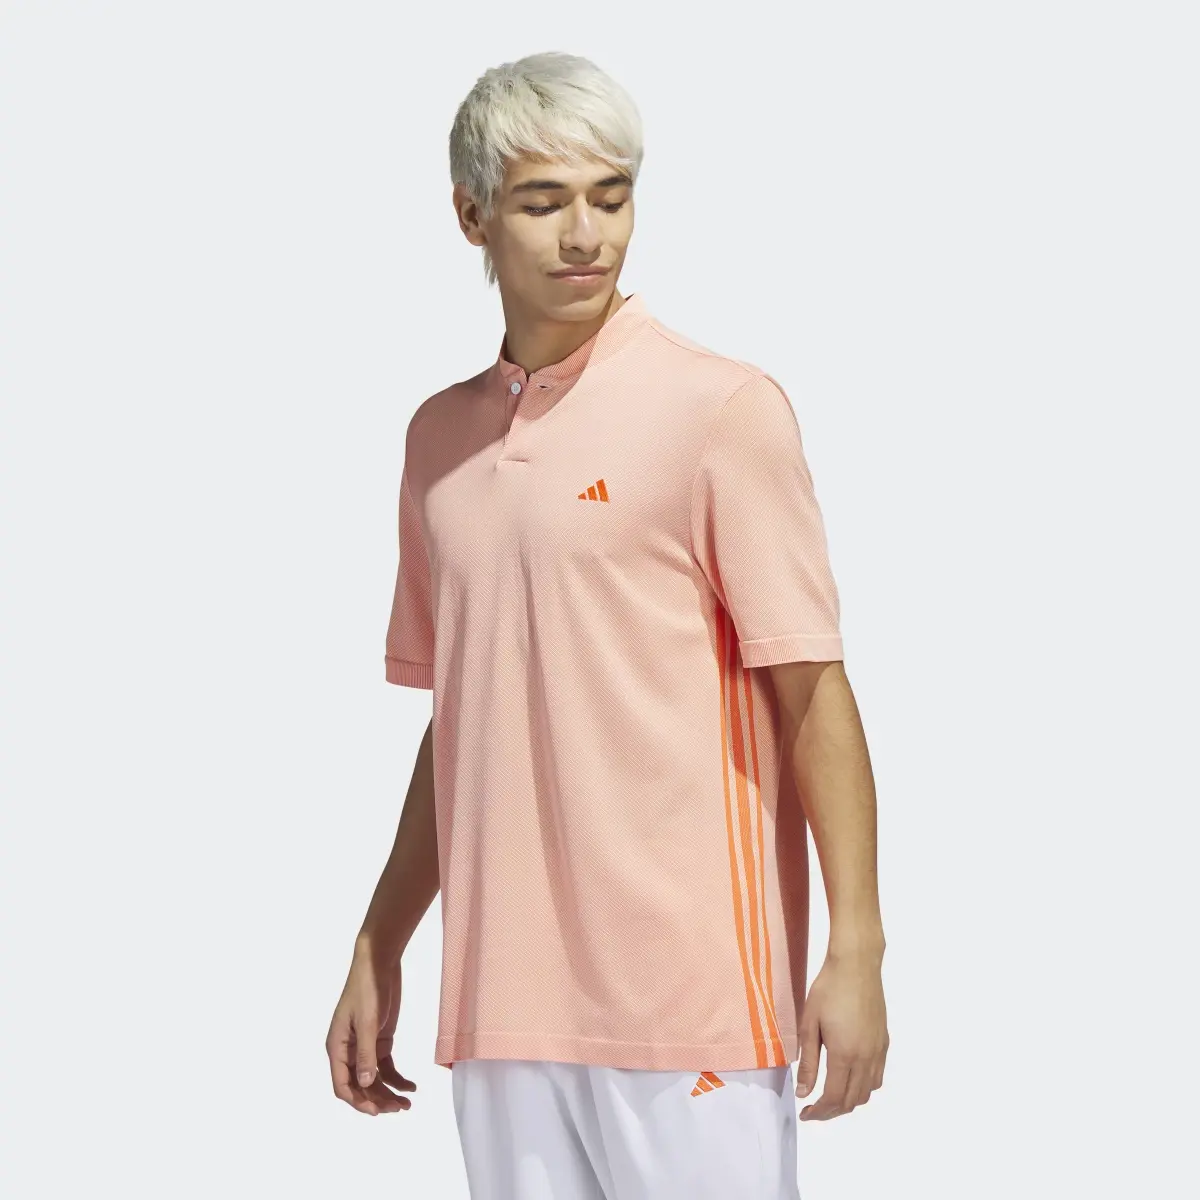 Adidas Made To Be Remade Henry Neck Seamless Golf Shirt. 2